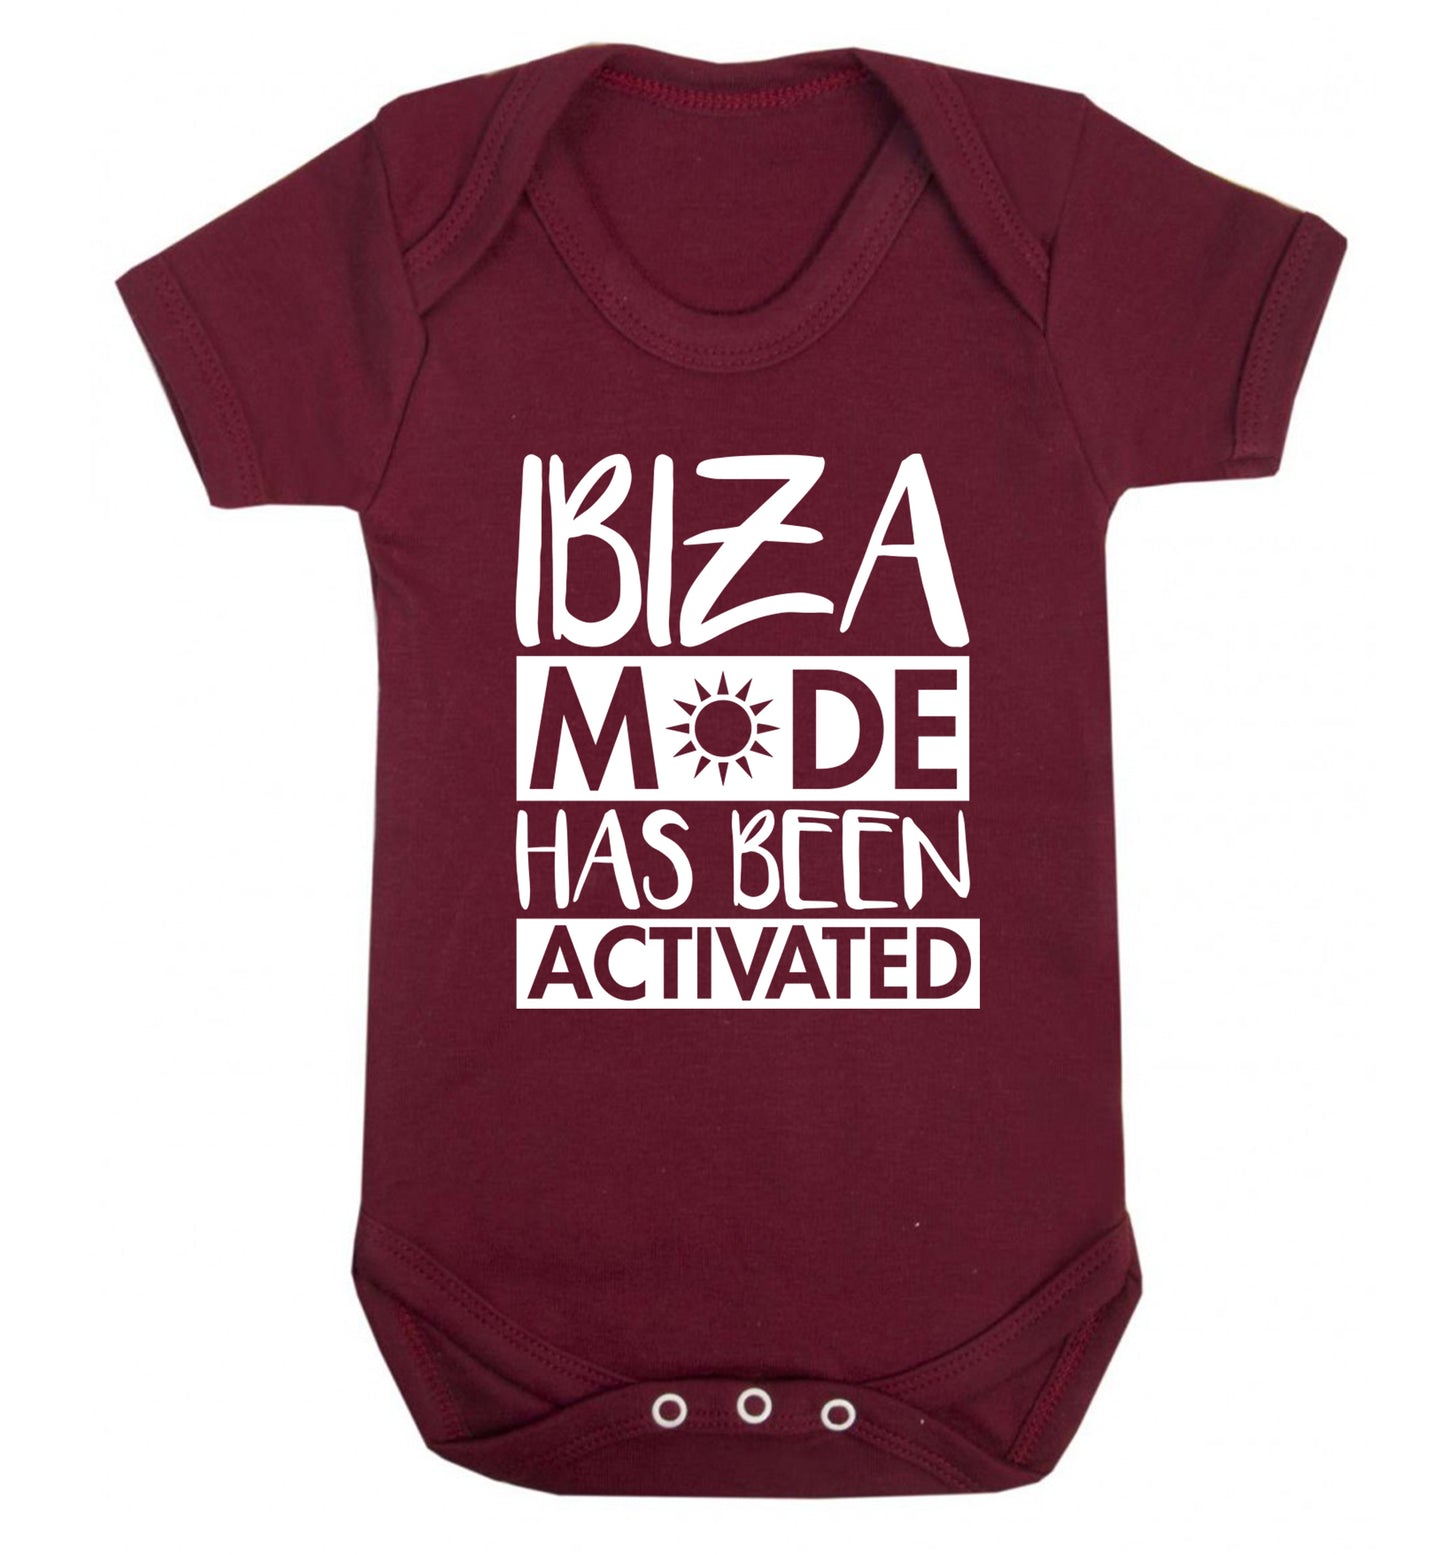 Ibiza mode has been activated Baby Vest maroon 18-24 months